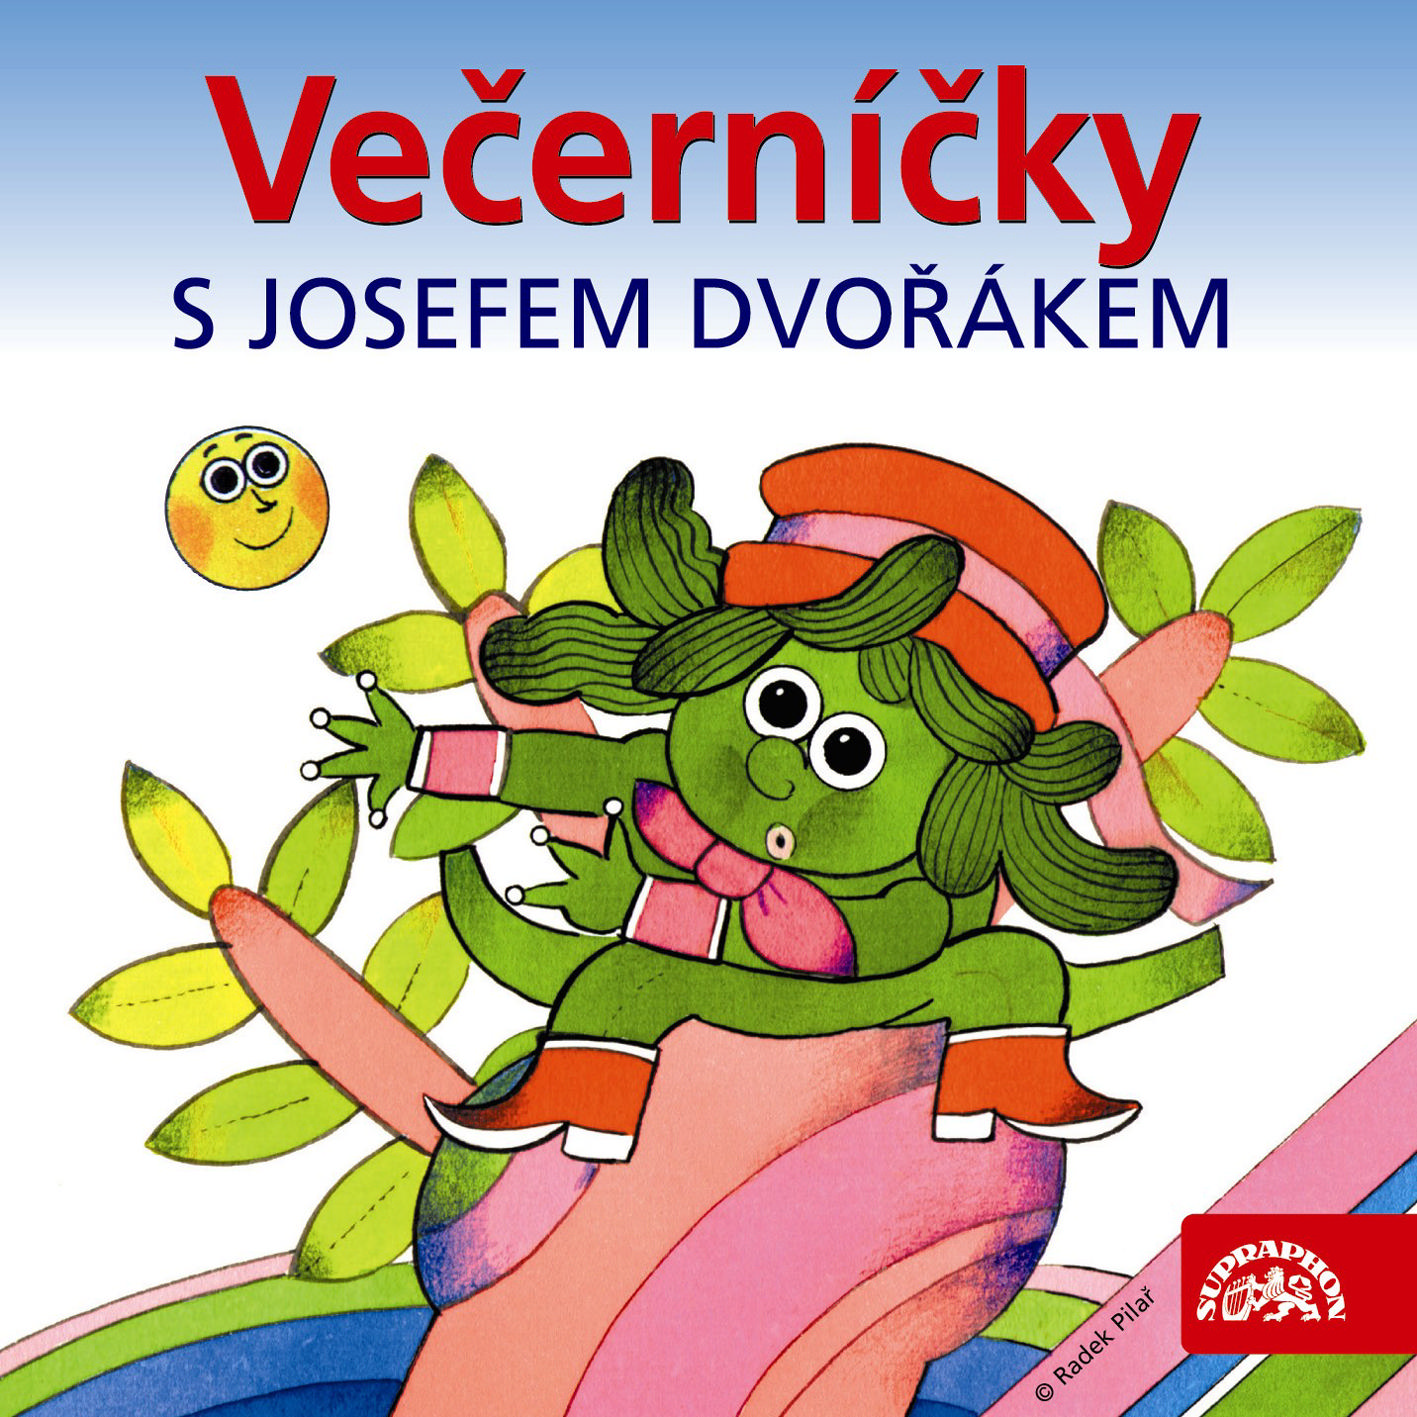 CD Shop - DVORAK JOSEF VECERNICKY S JOSEFEM DVORAKEM